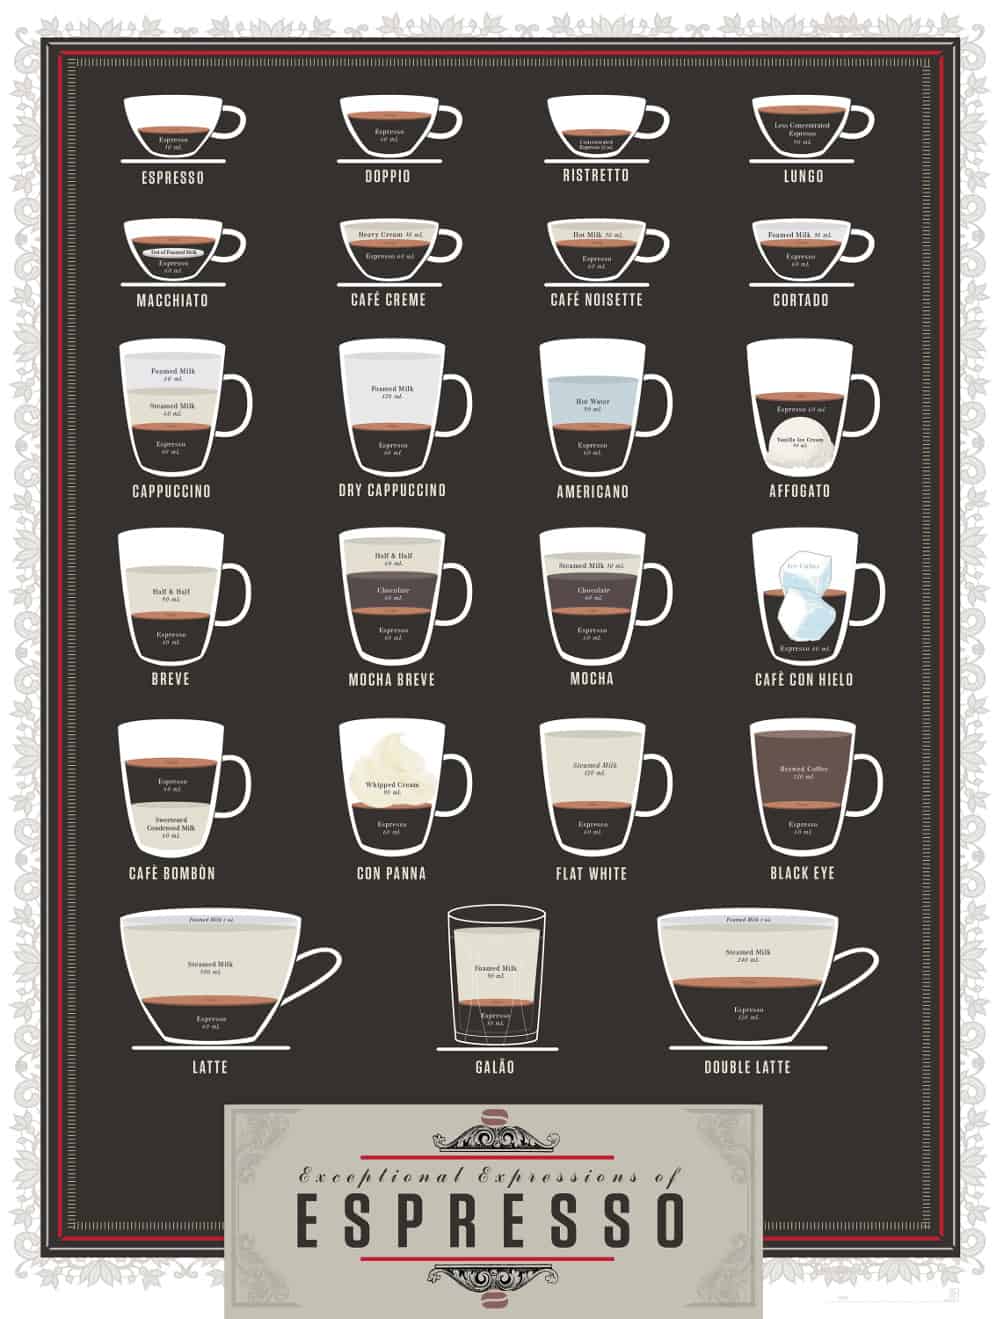 Espresso Drink Recipes Espresso & Coffee Guide